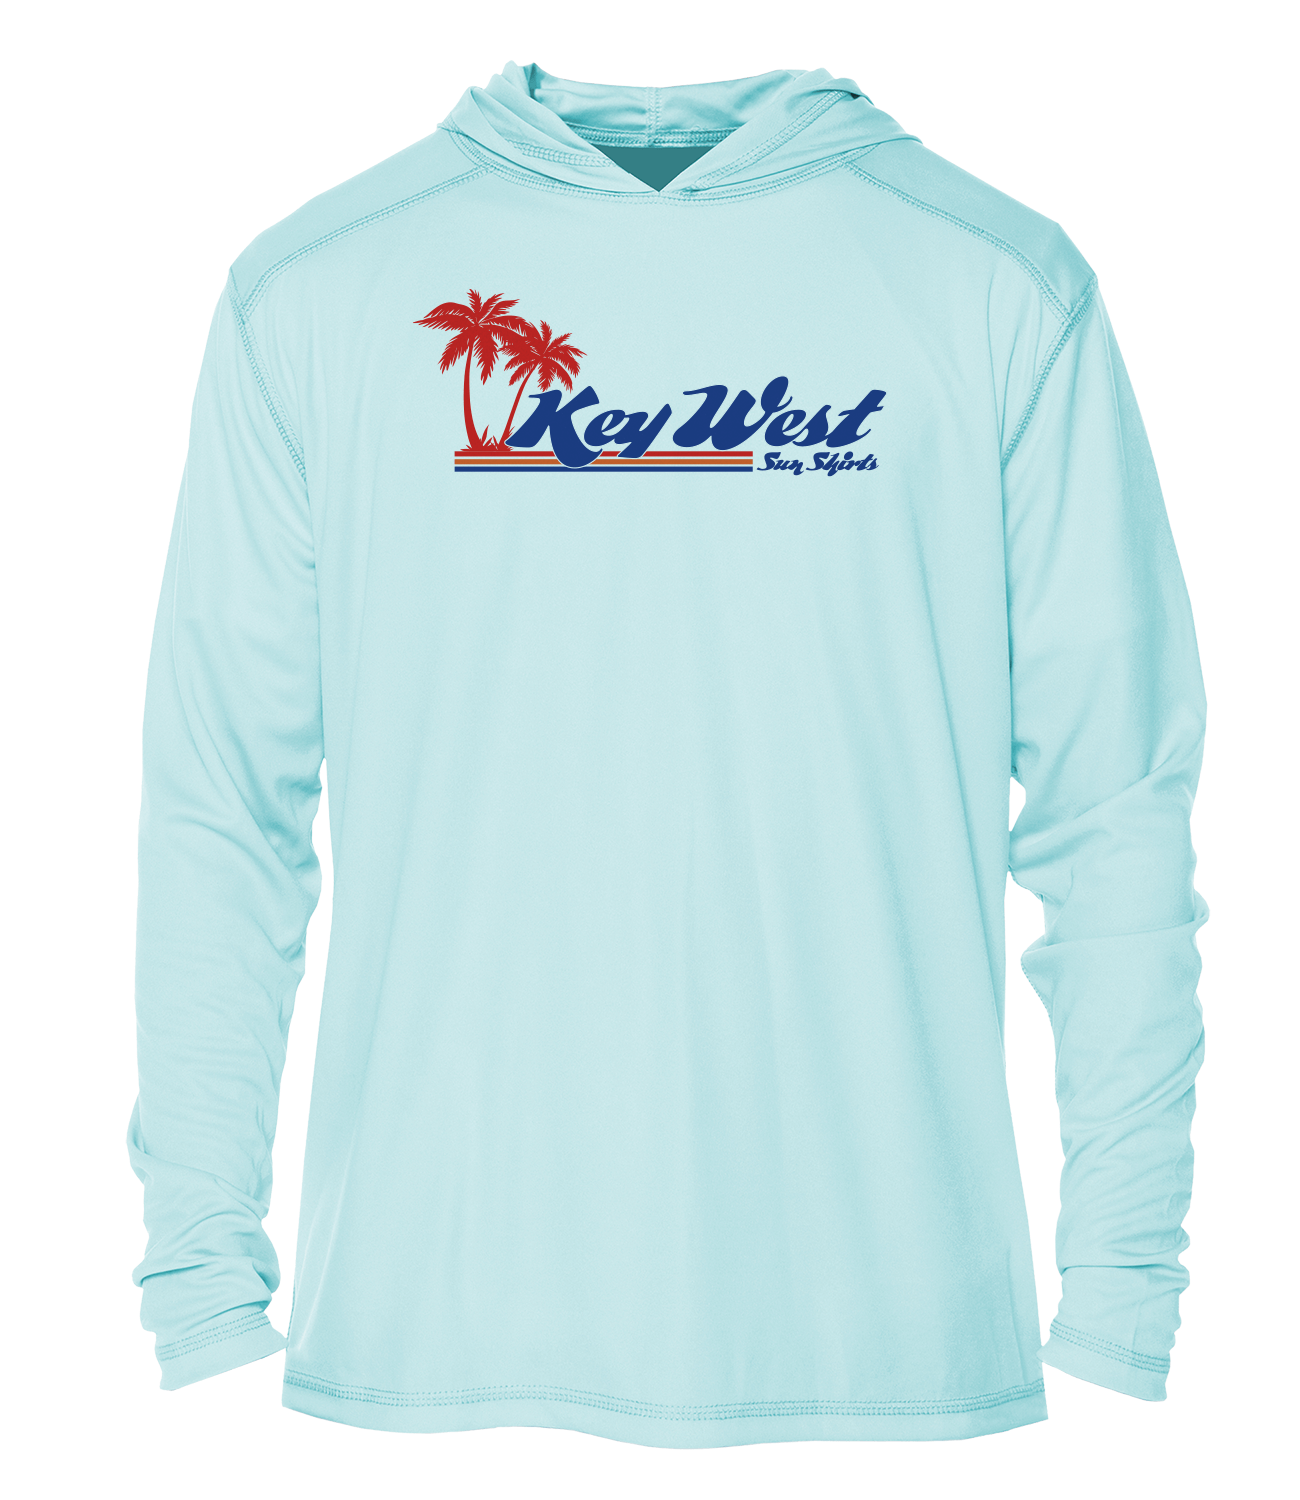 Busch Light Retro Usa Fishing shirt, hoodie, sweater, long sleeve